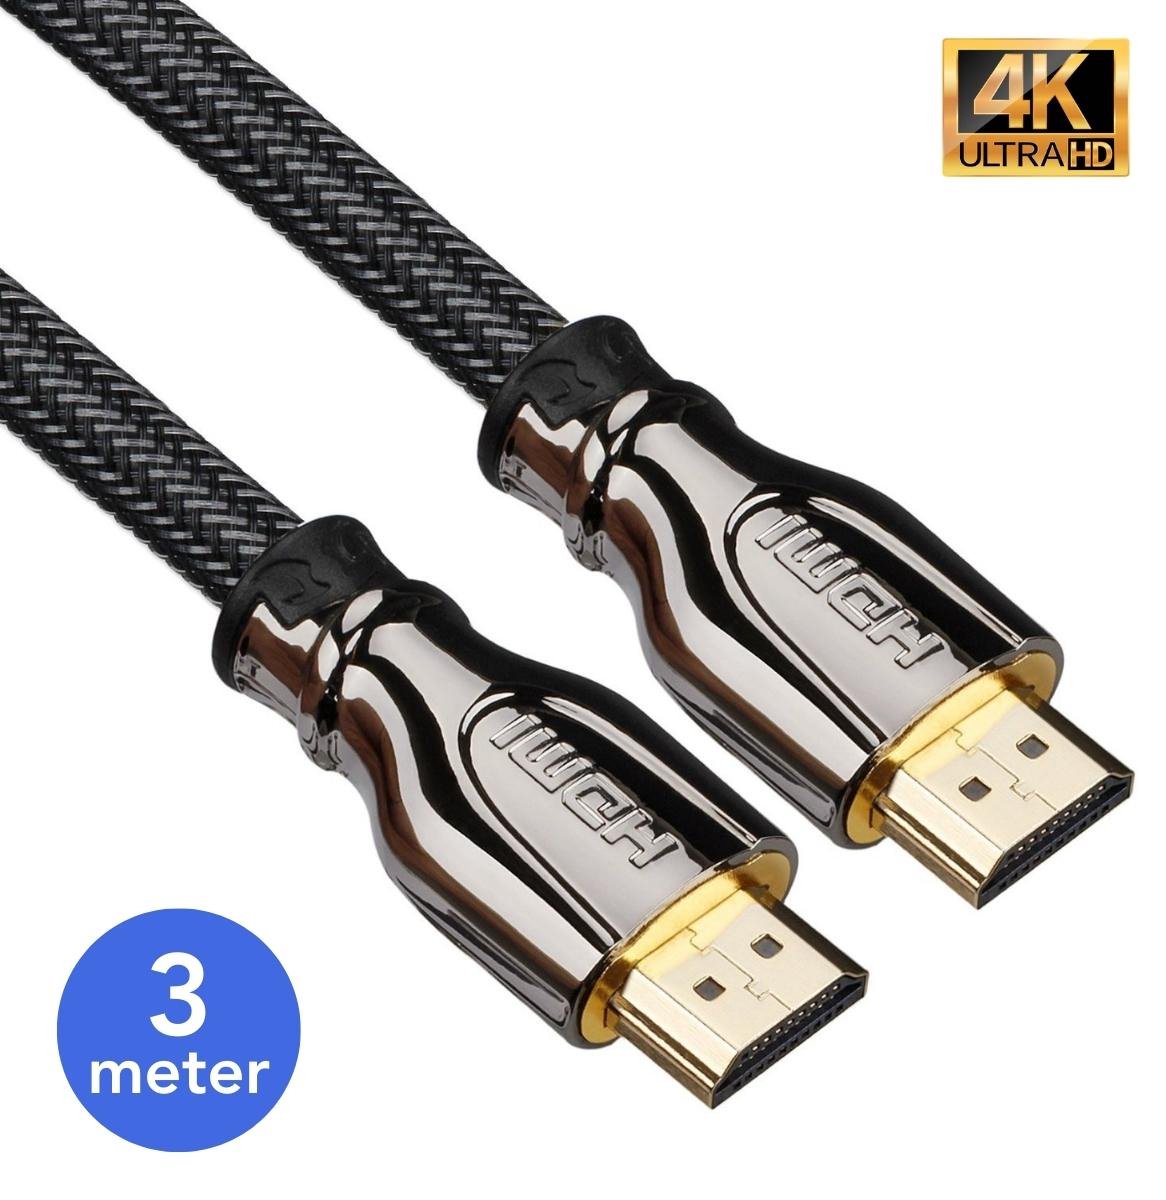 HDMI 2.0 Kabel 3 Meter - Ultra HD 4K High Speed (60/120/240Hz) - Vergulde Connectoren - 18GBPS - Premium 3D - TV - PC - PlayStation 4 - Xbox One